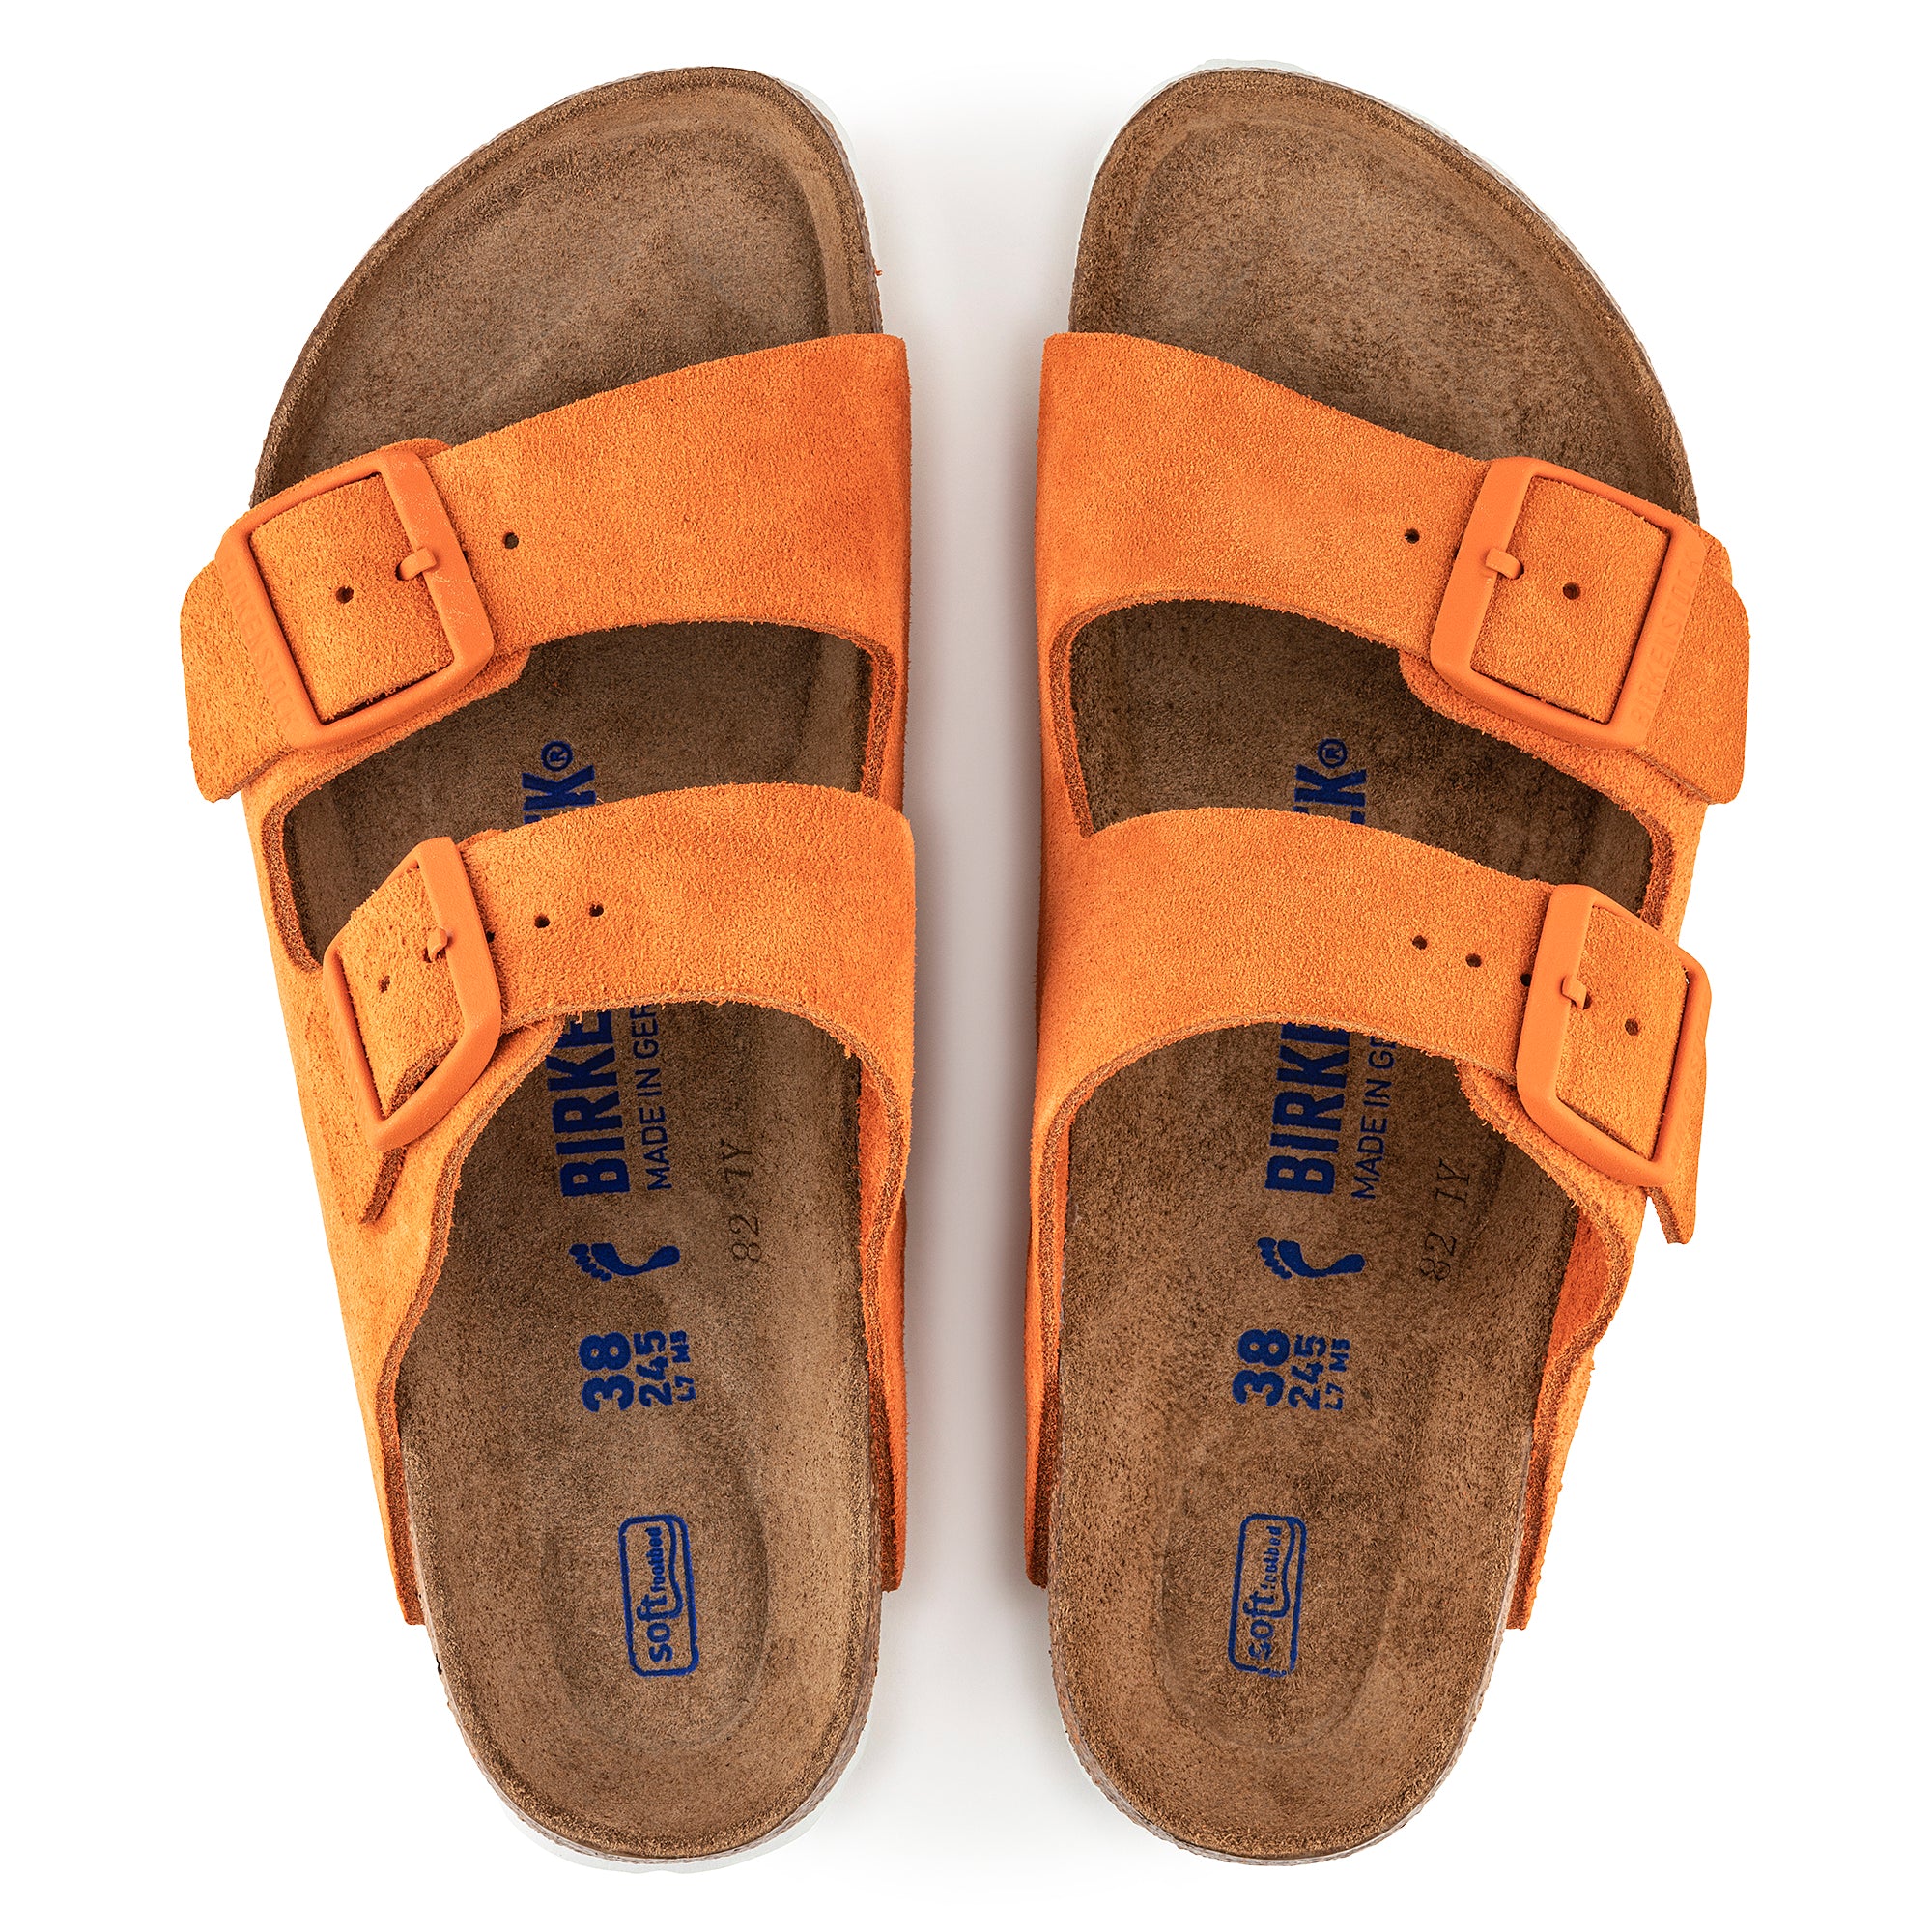 Birkenstock Limited Edition Arizona Soft Footbed russet orange suede